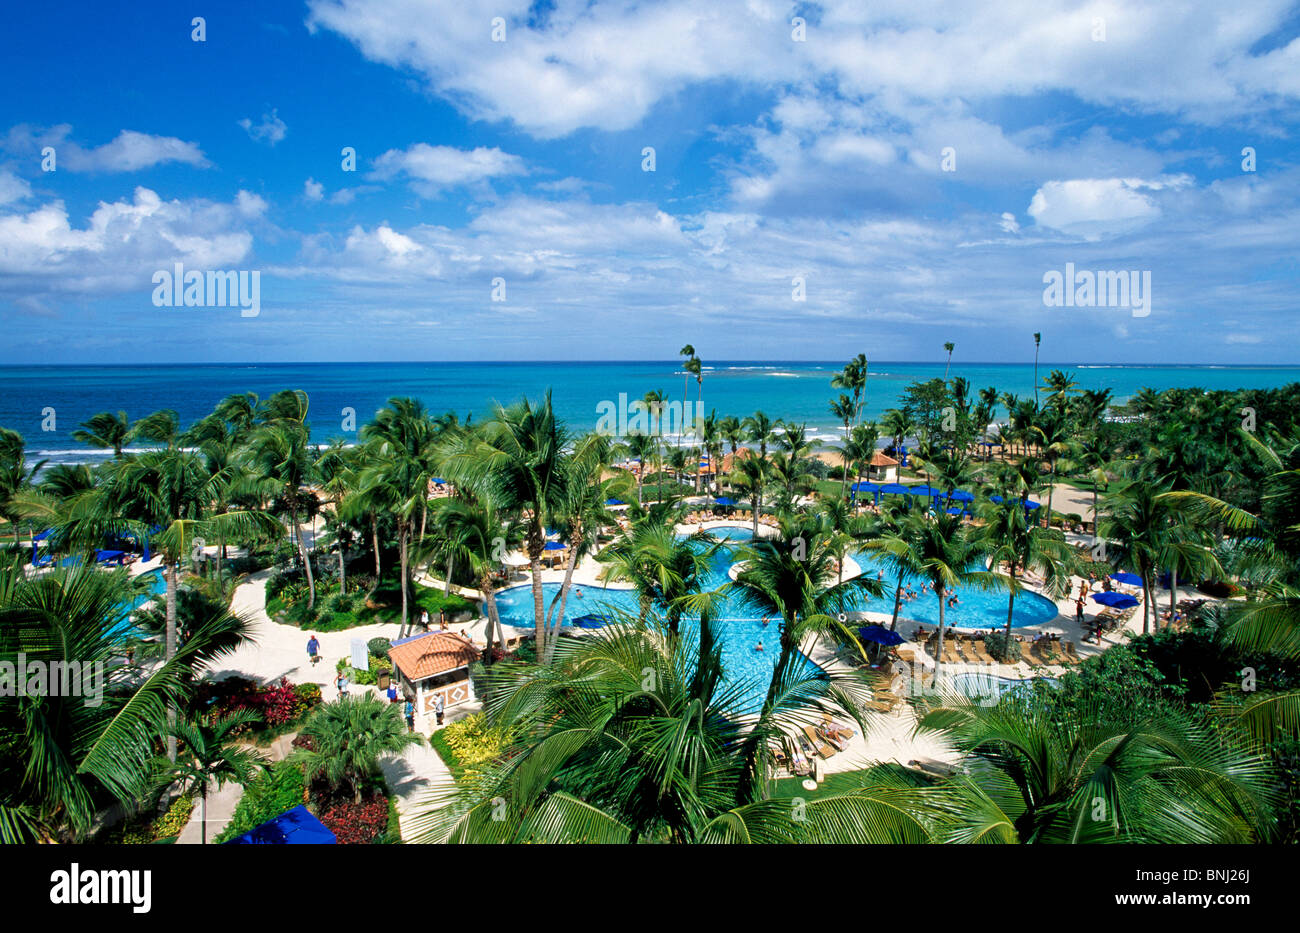 Day Puerto Rico Island Islands Caribbean Sea Ocean Antilles Greater Antilles Wyndham Rio Mar Beach Resort Rio Grande Hotel Pool Stock Photo Alamy